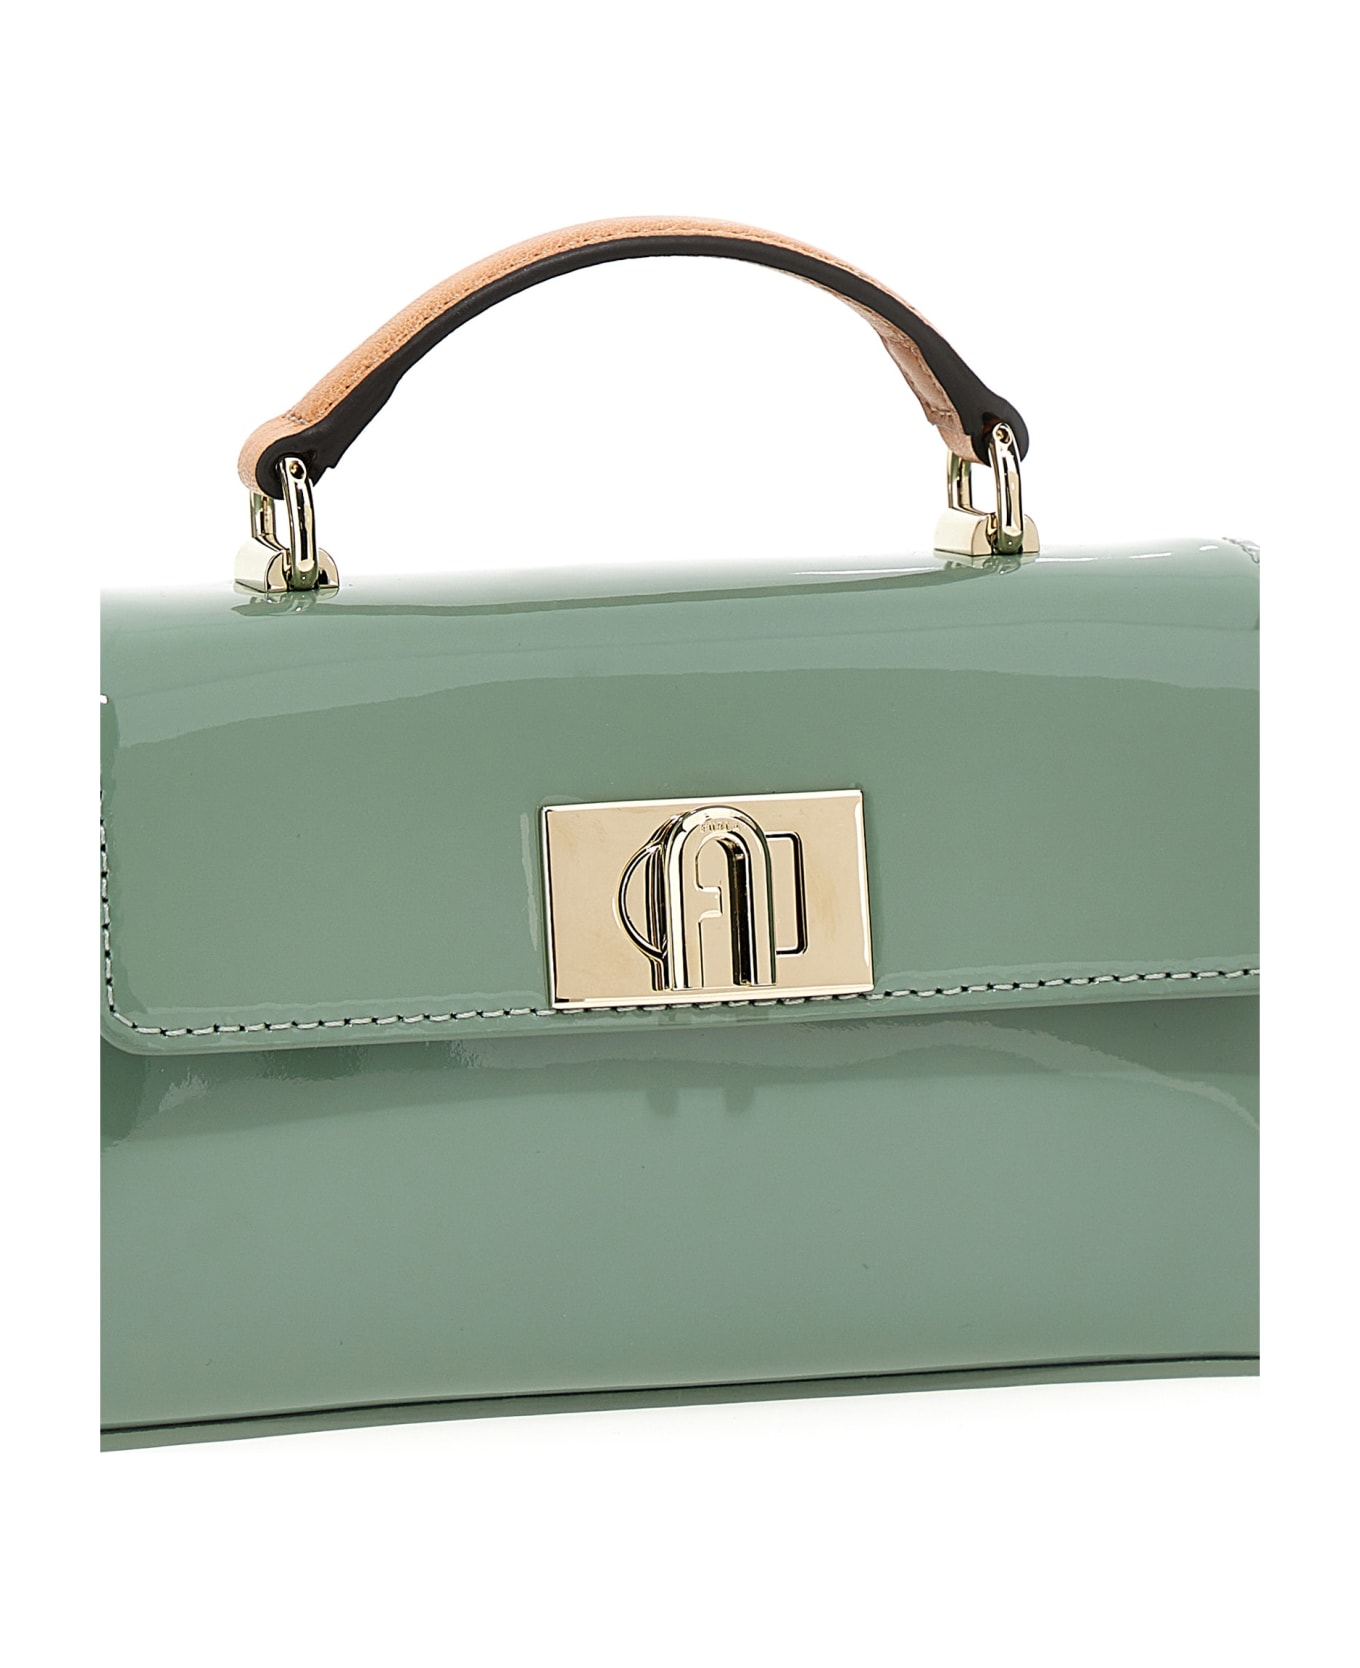 Furla 'furla 1927' Mini Handbag - Green